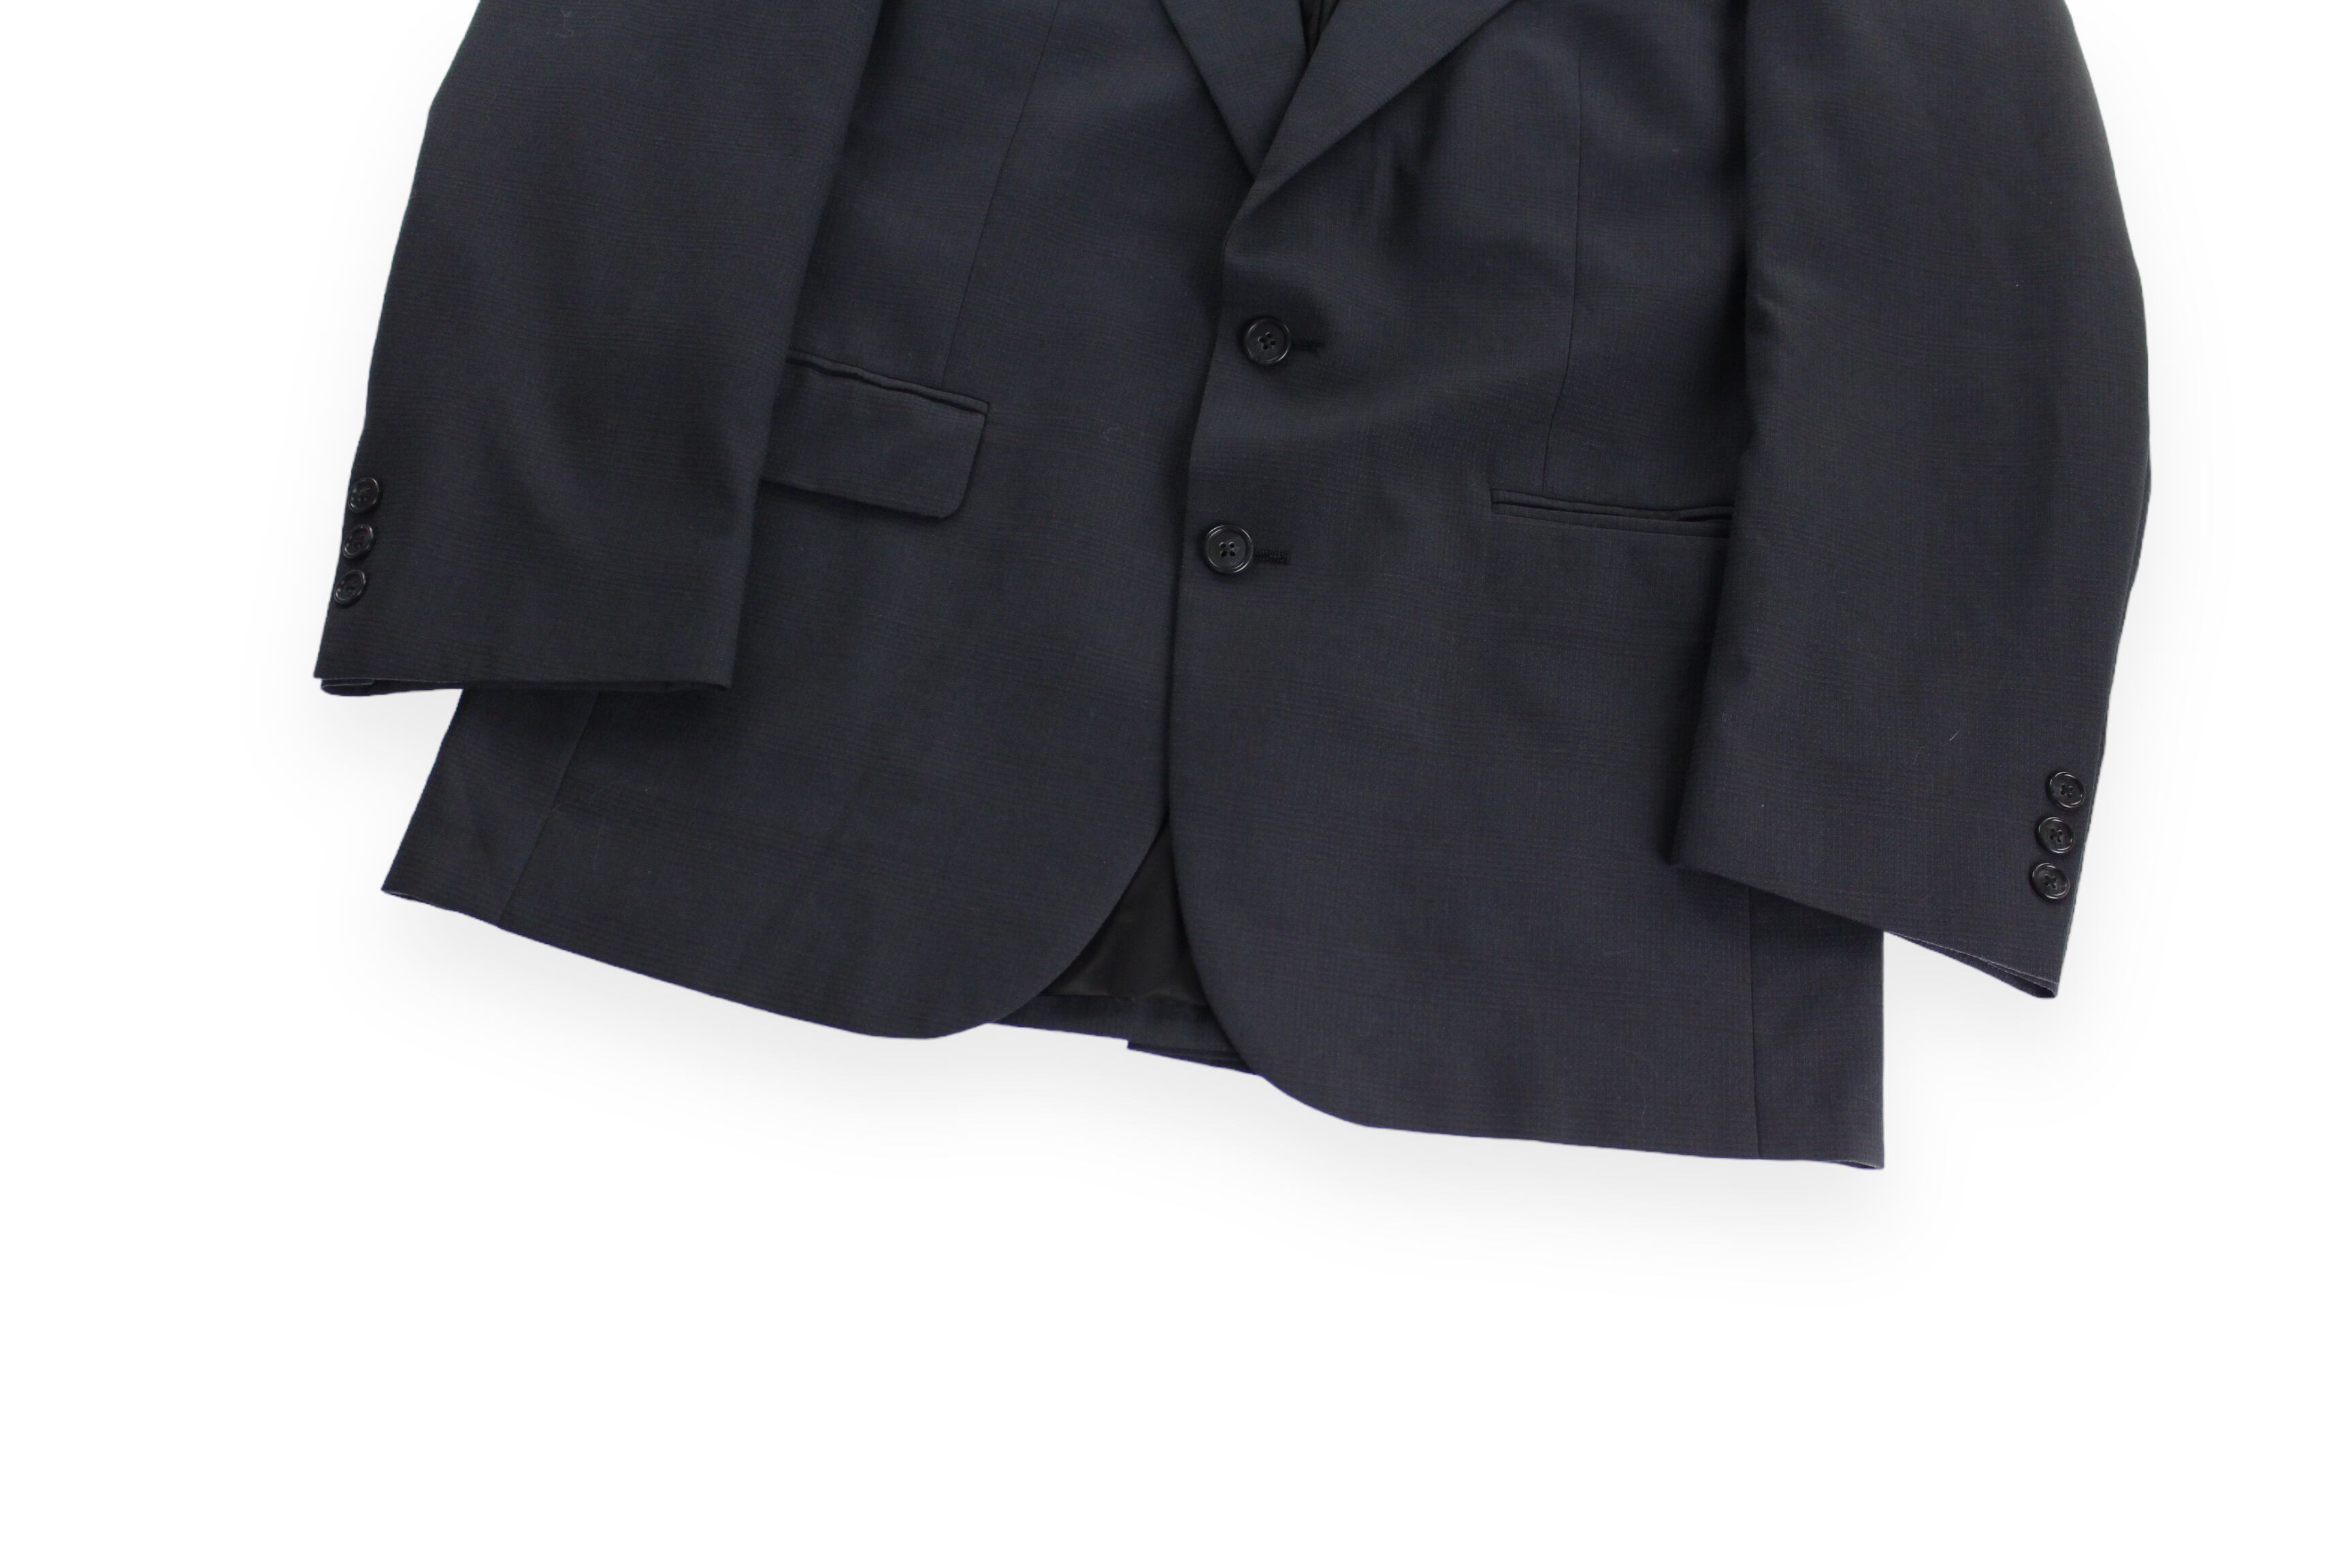 COU】1980s Christian Dior suit setup / single tailored jacket 